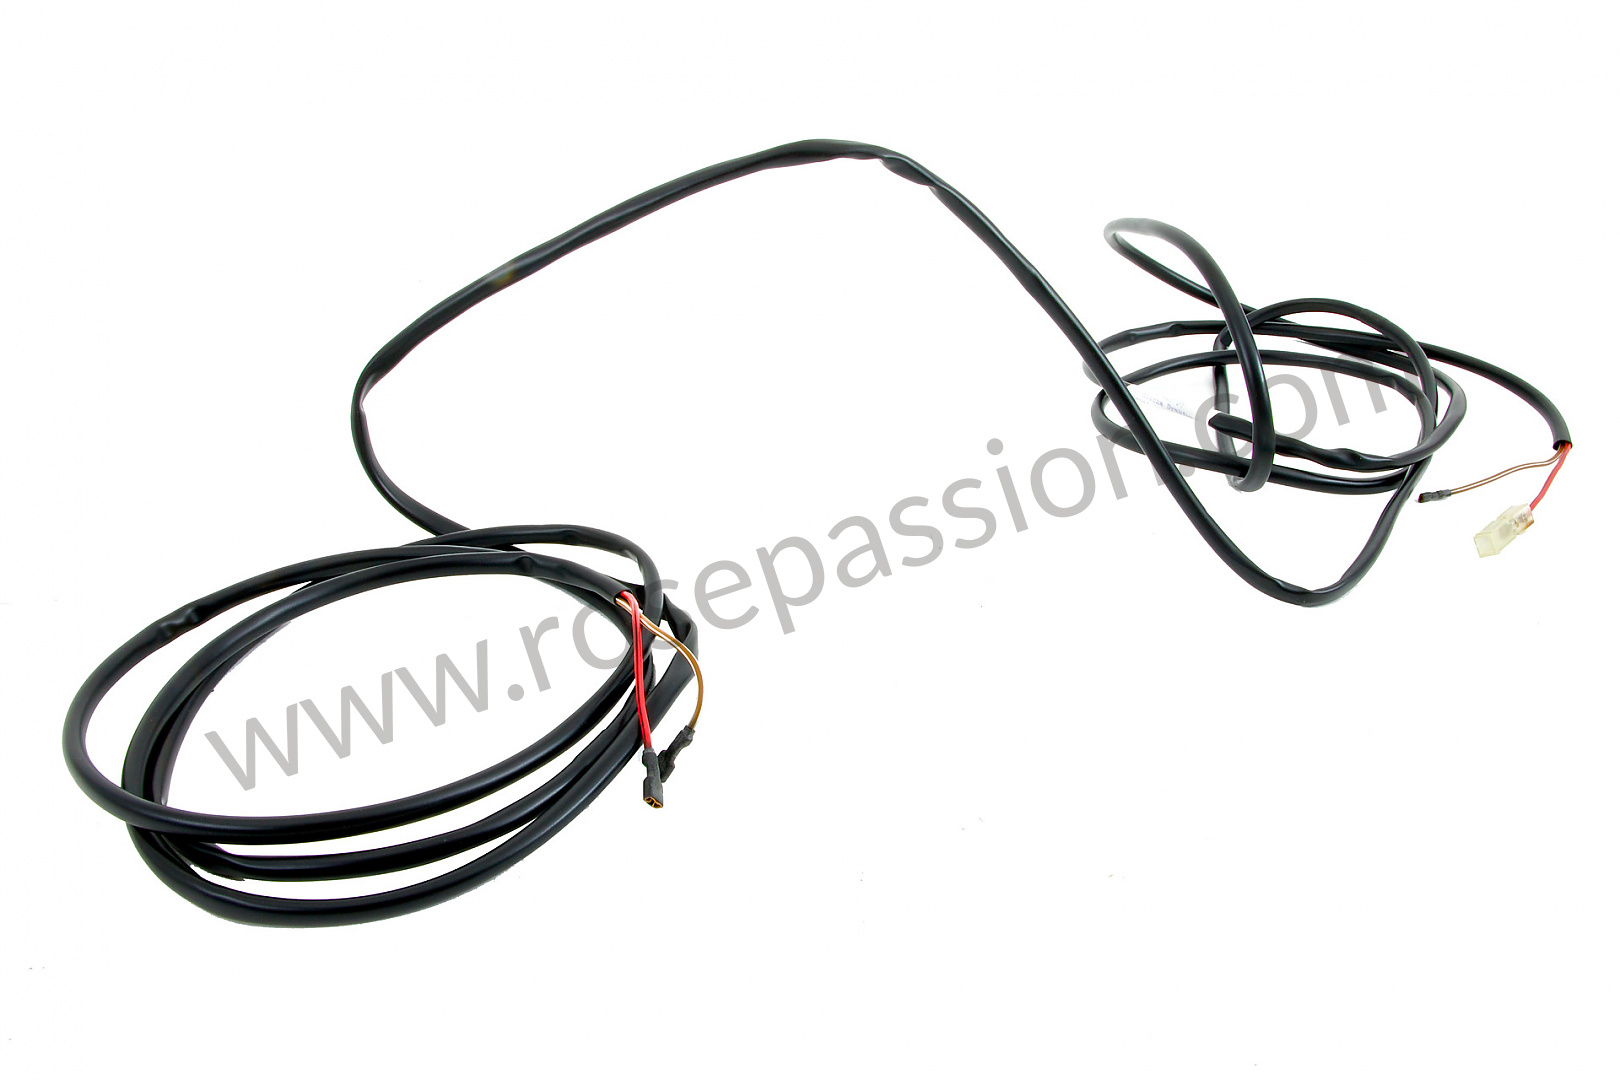 https://cdn.rosepassion.com/91161202501-p18089-wire-harness-switch-windschutzscheibenwischer-photo-18089-0-web91161202501.jpg?w=1920&h=1080&format=jpg-95